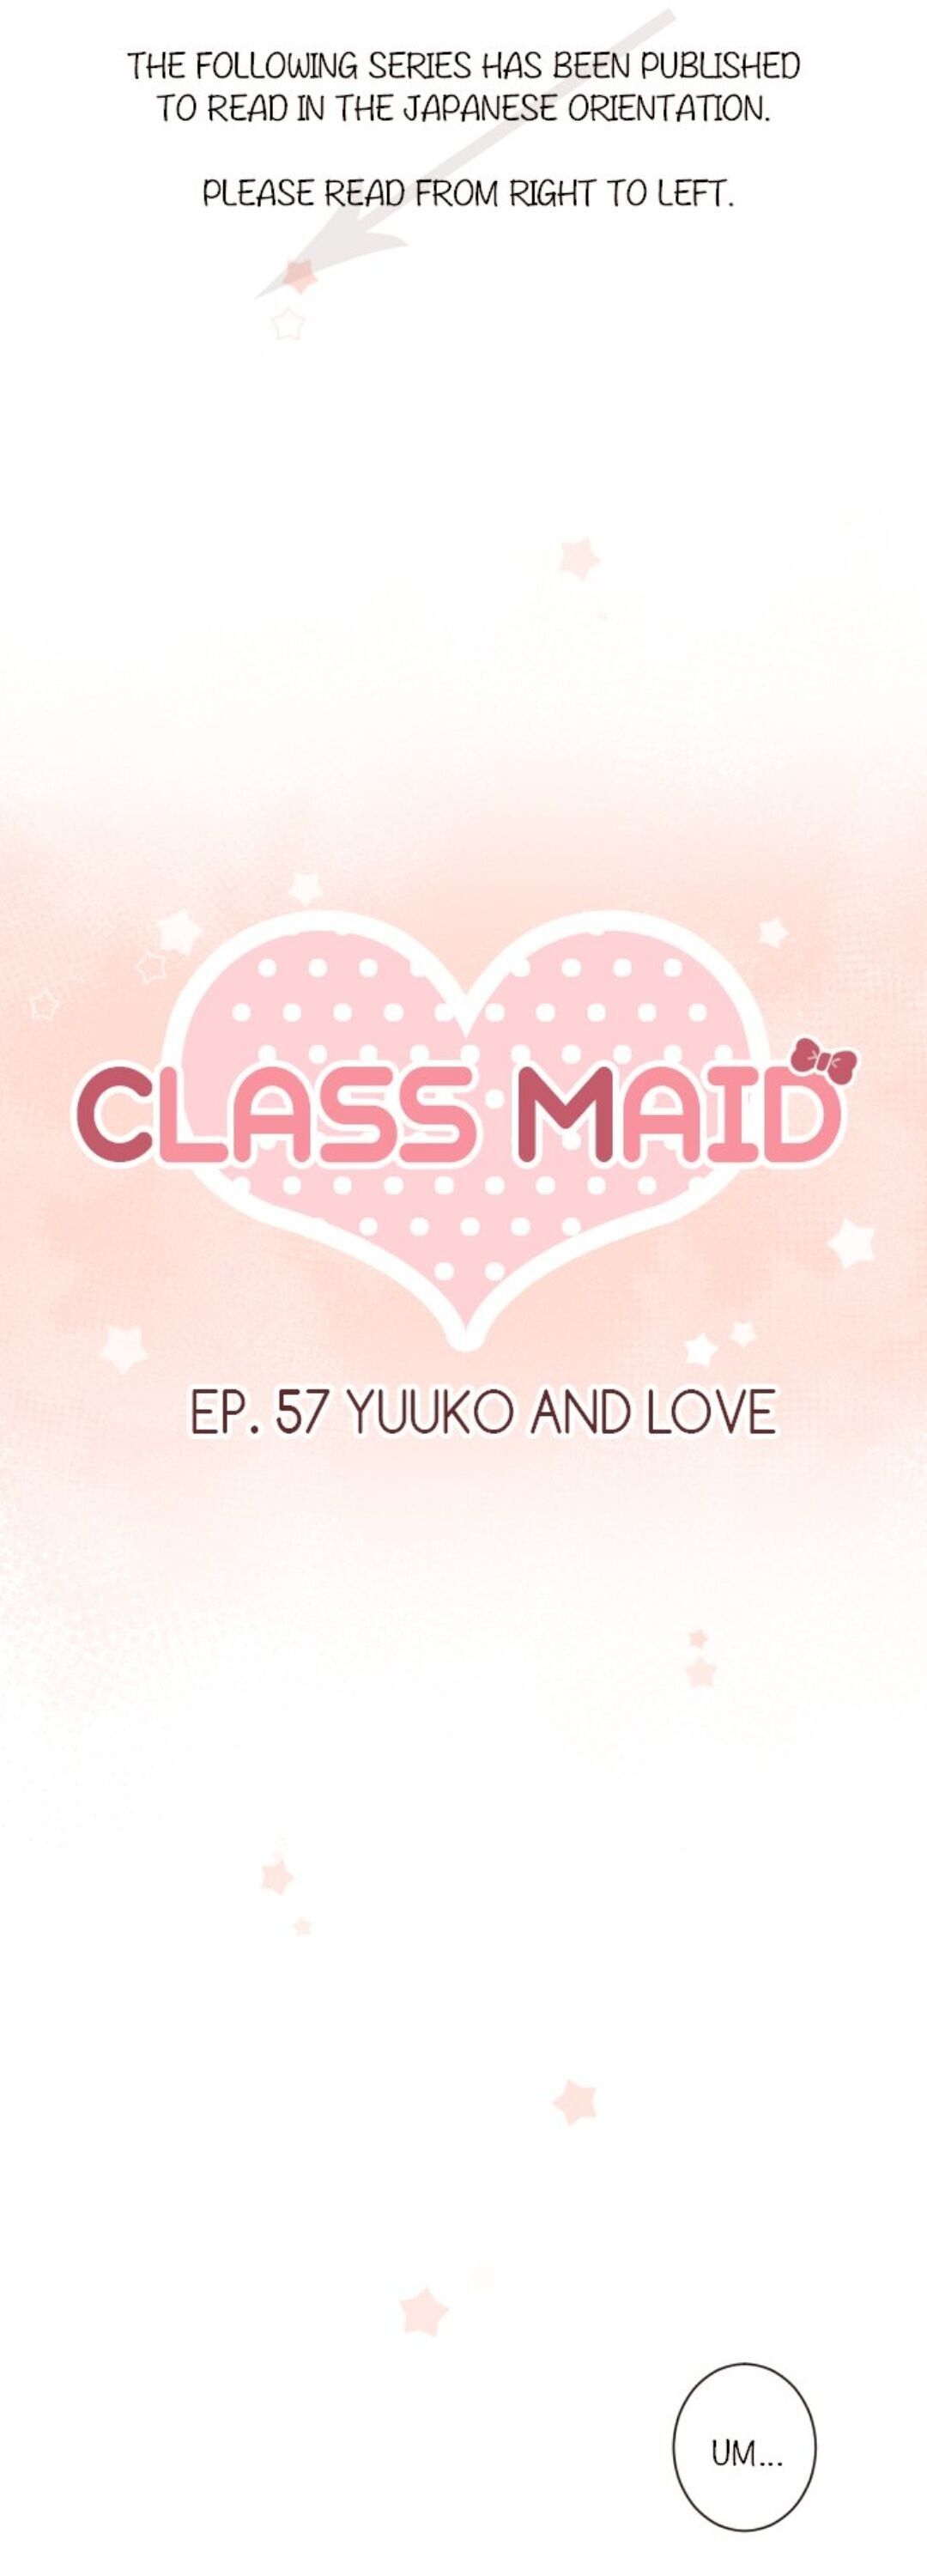 Class Maid - Page 1